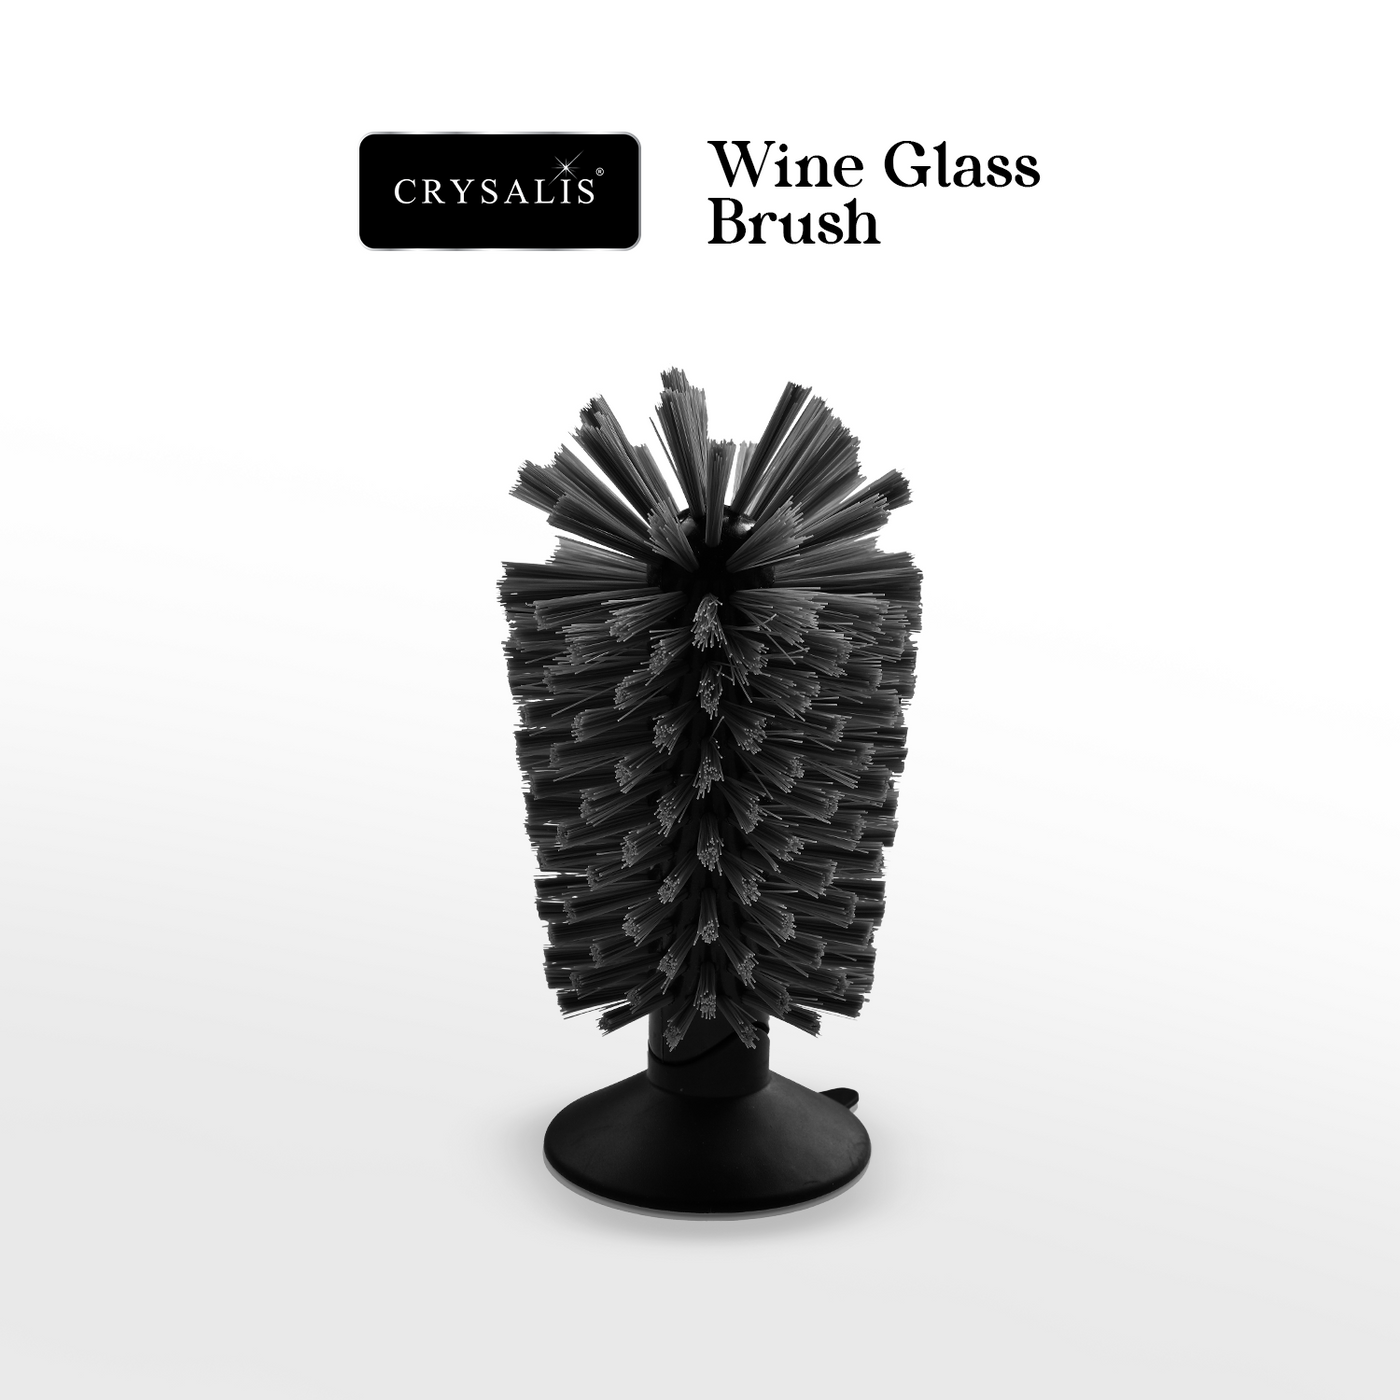 CRYSALIS Premium Wine Glass Brush Cleaning Essentials